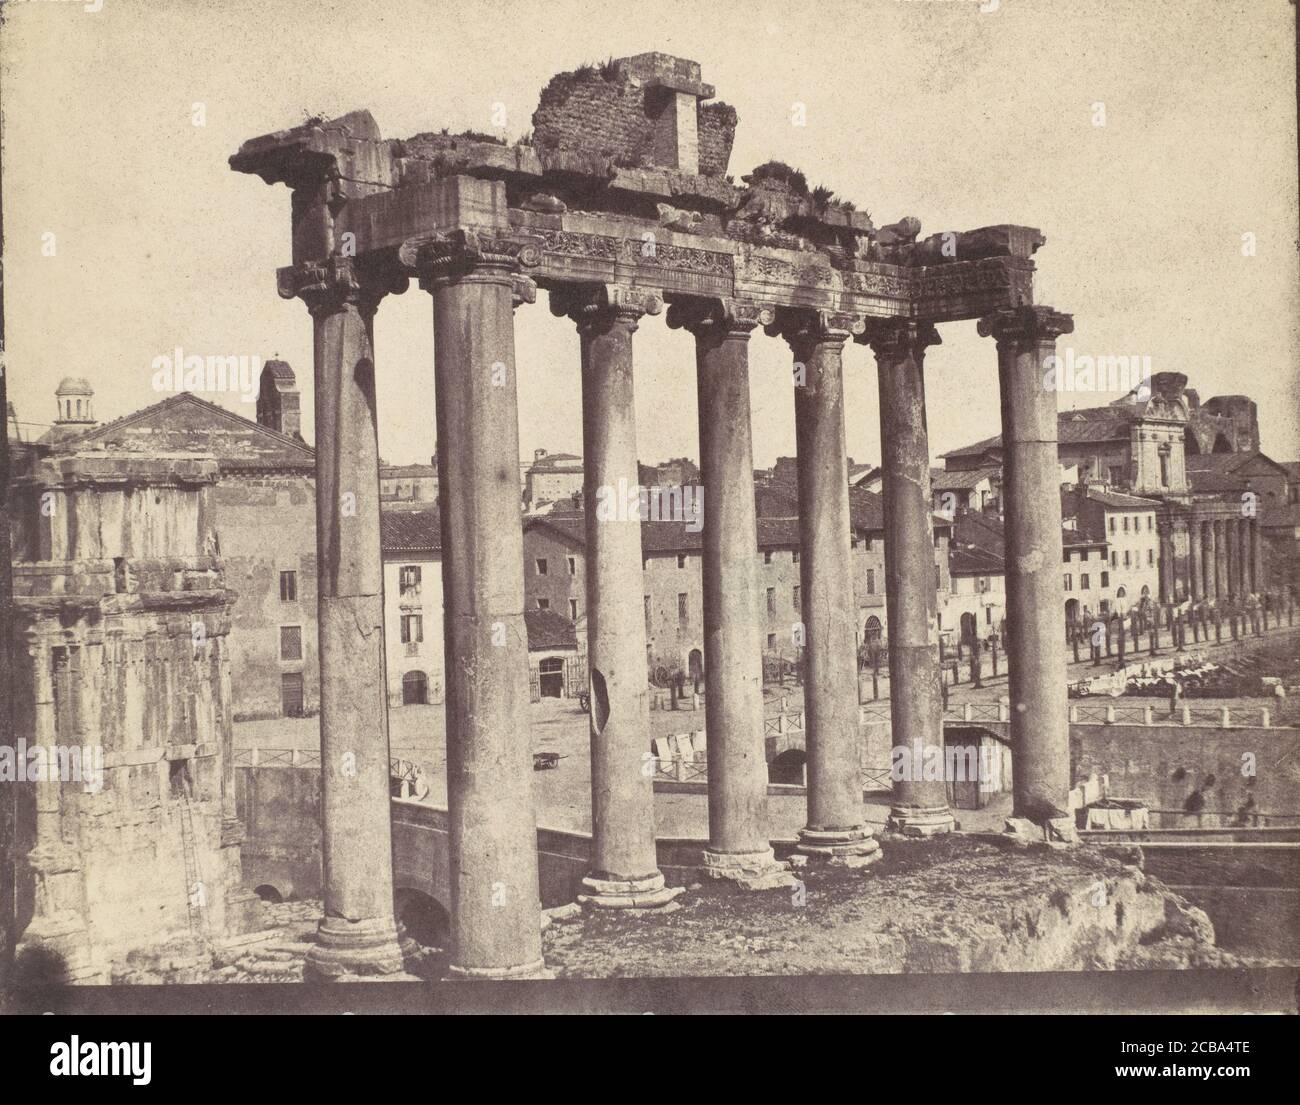 Temple of Concord, Rome, 1850s Stock Photo - Alamy